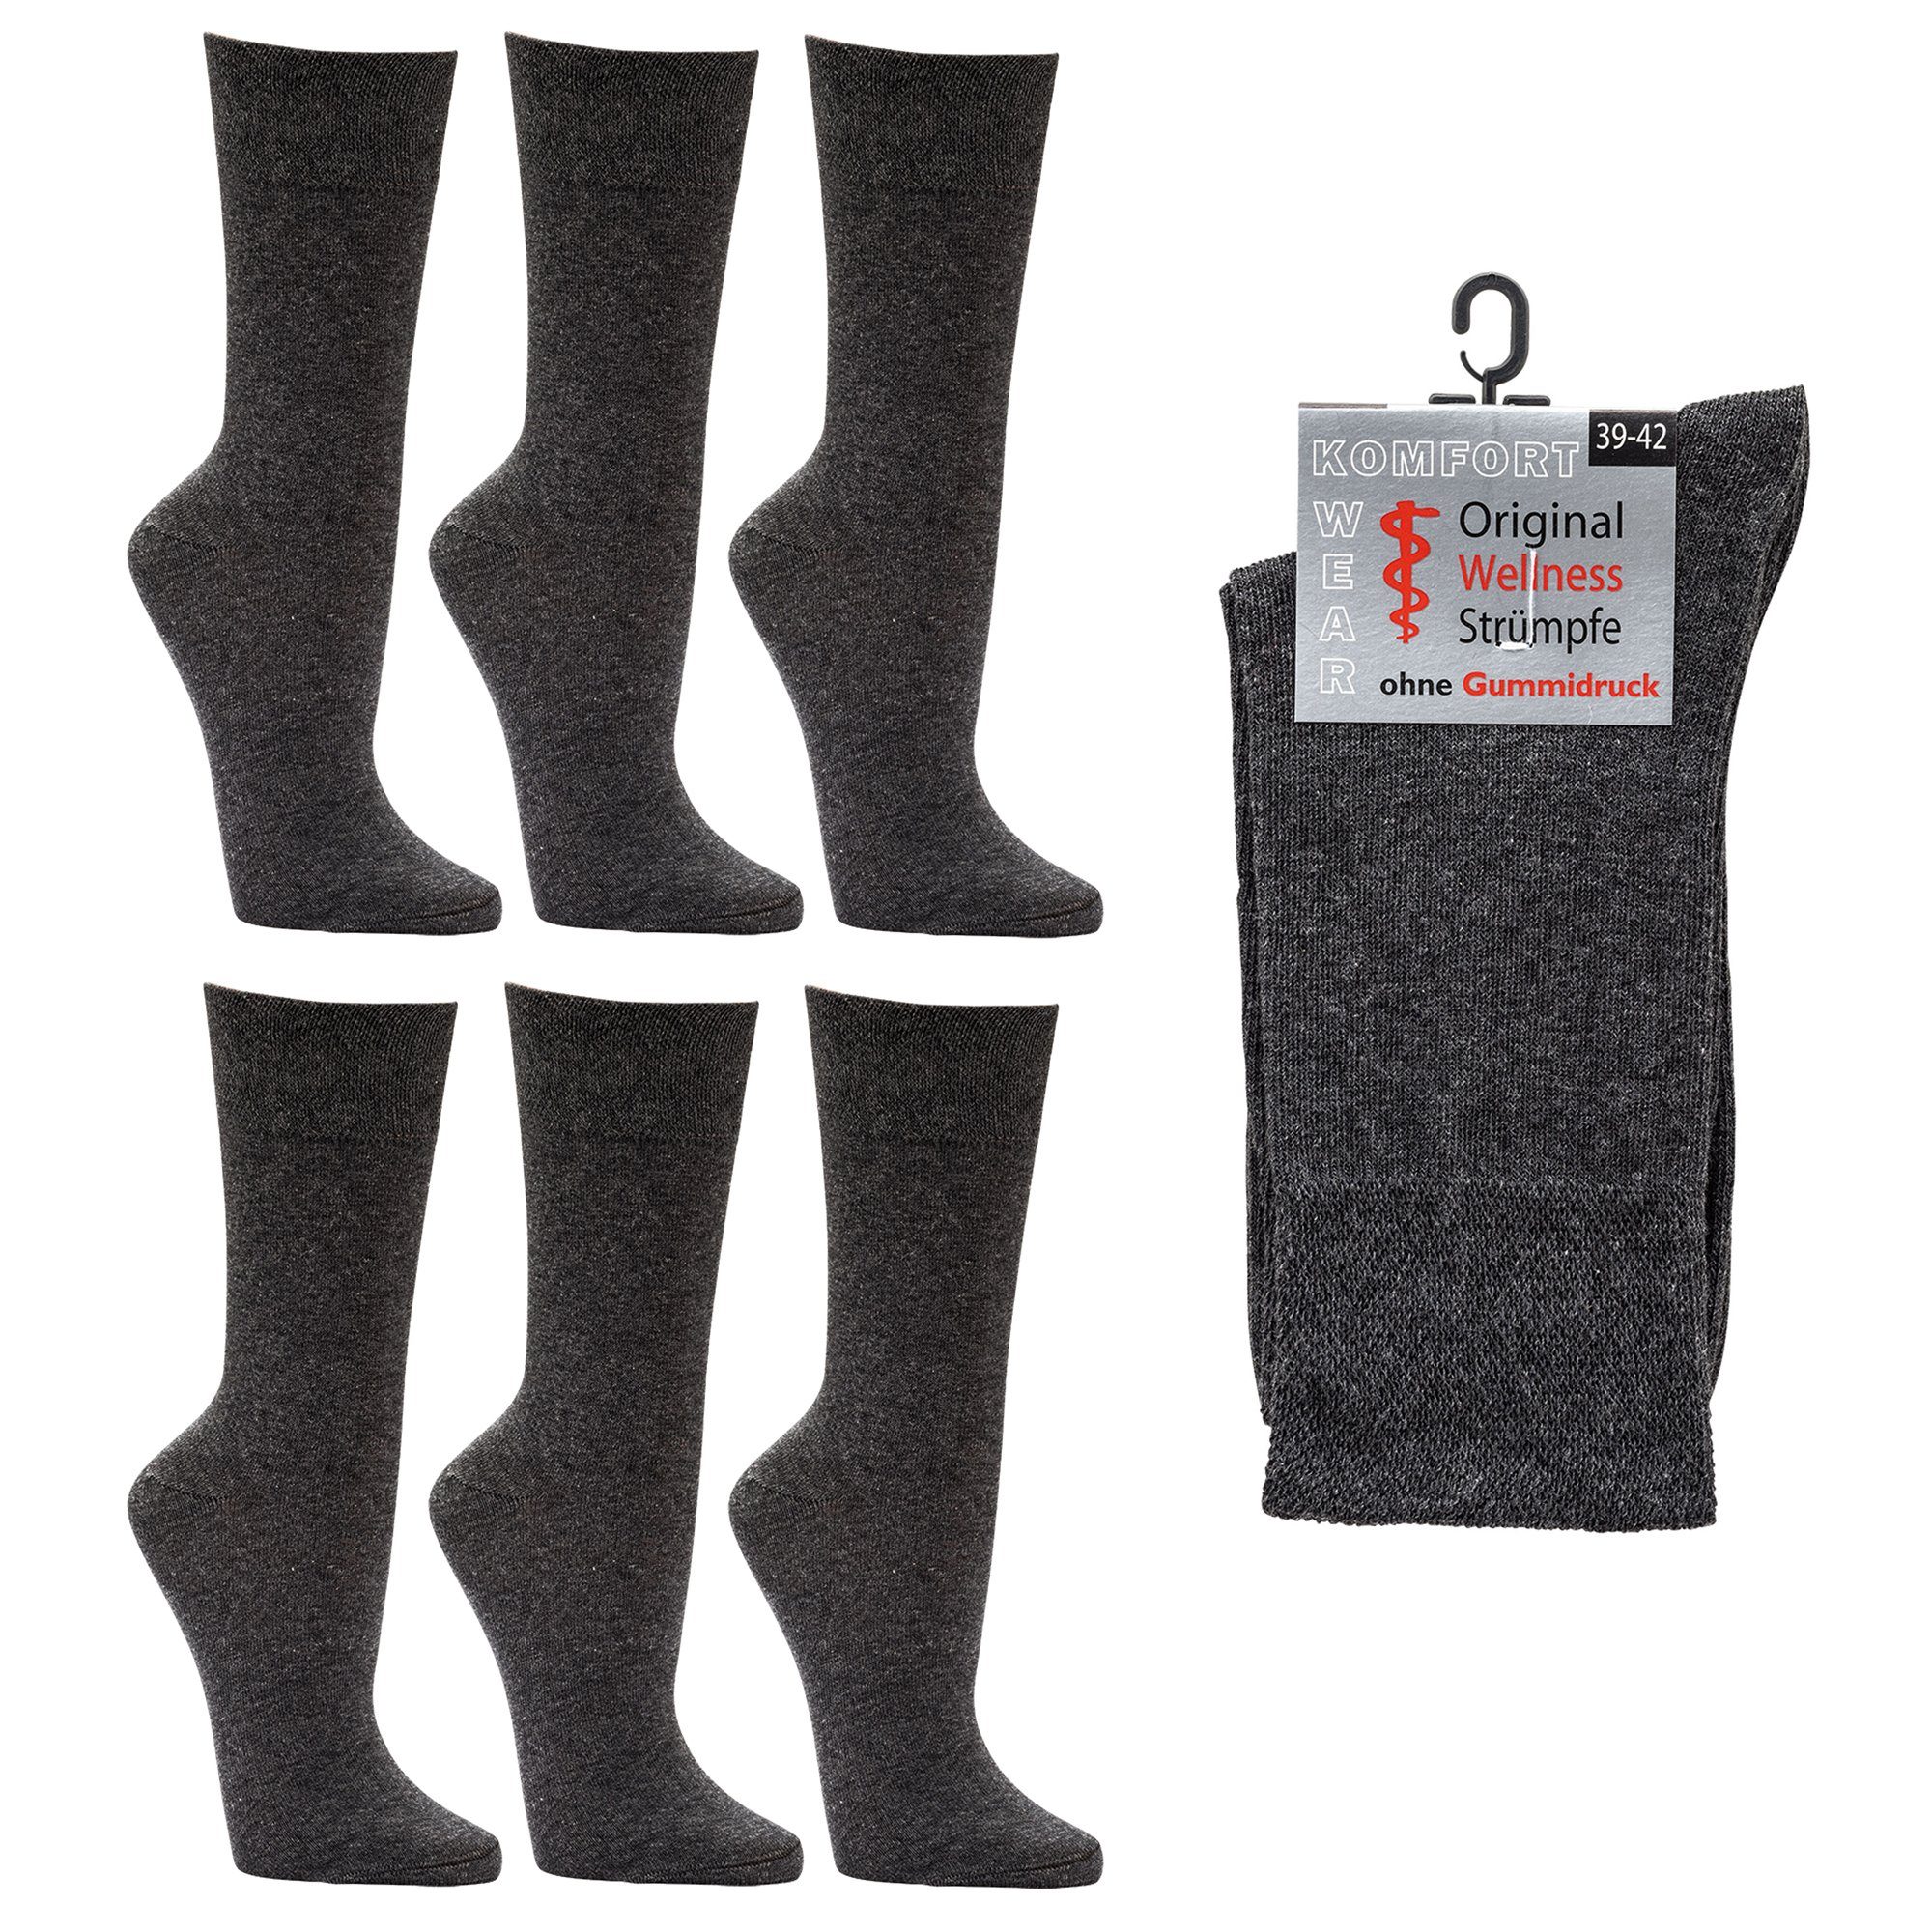 Socks 4 Fun Langsocken 2162 (Packung, 6-Paar, 6 Paar) Wellness-Socken ohne Gummidruck Herren Damen Socken Komfortbund